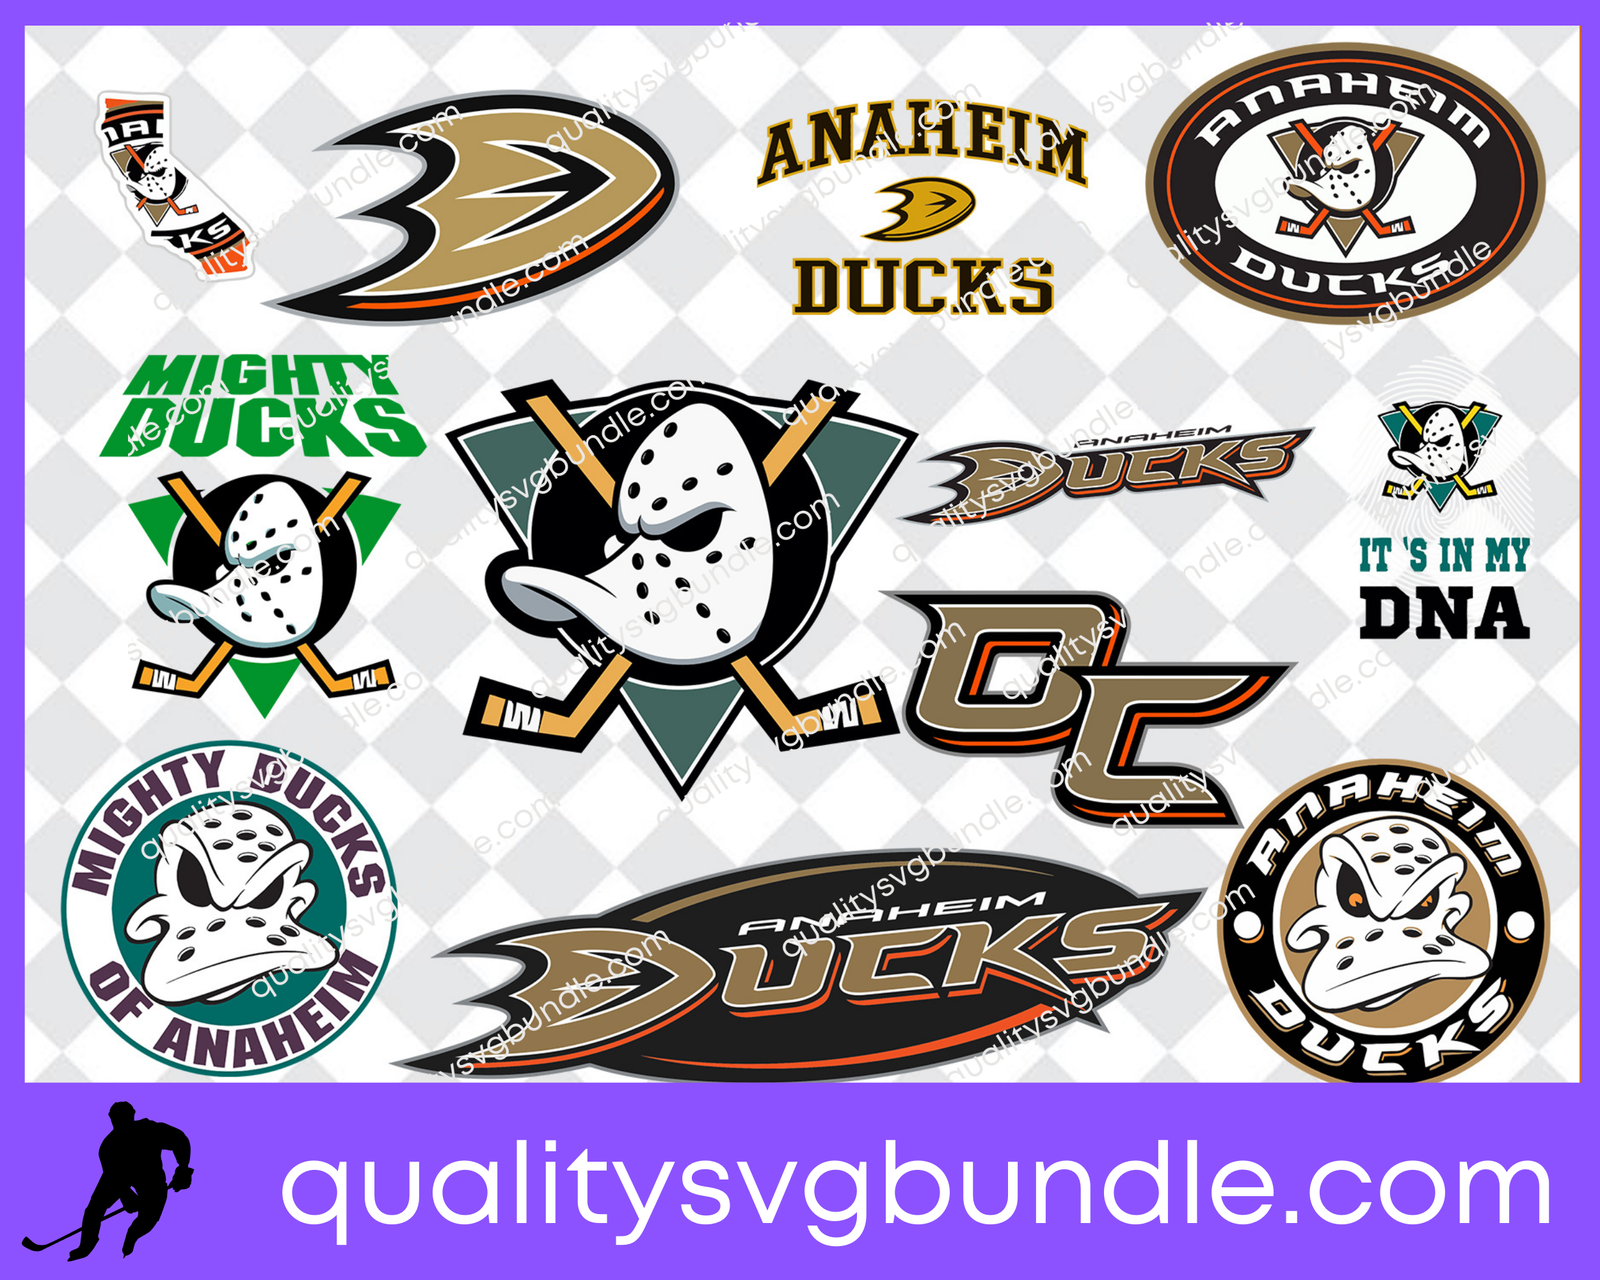 naheim-ducks Hockey Teams